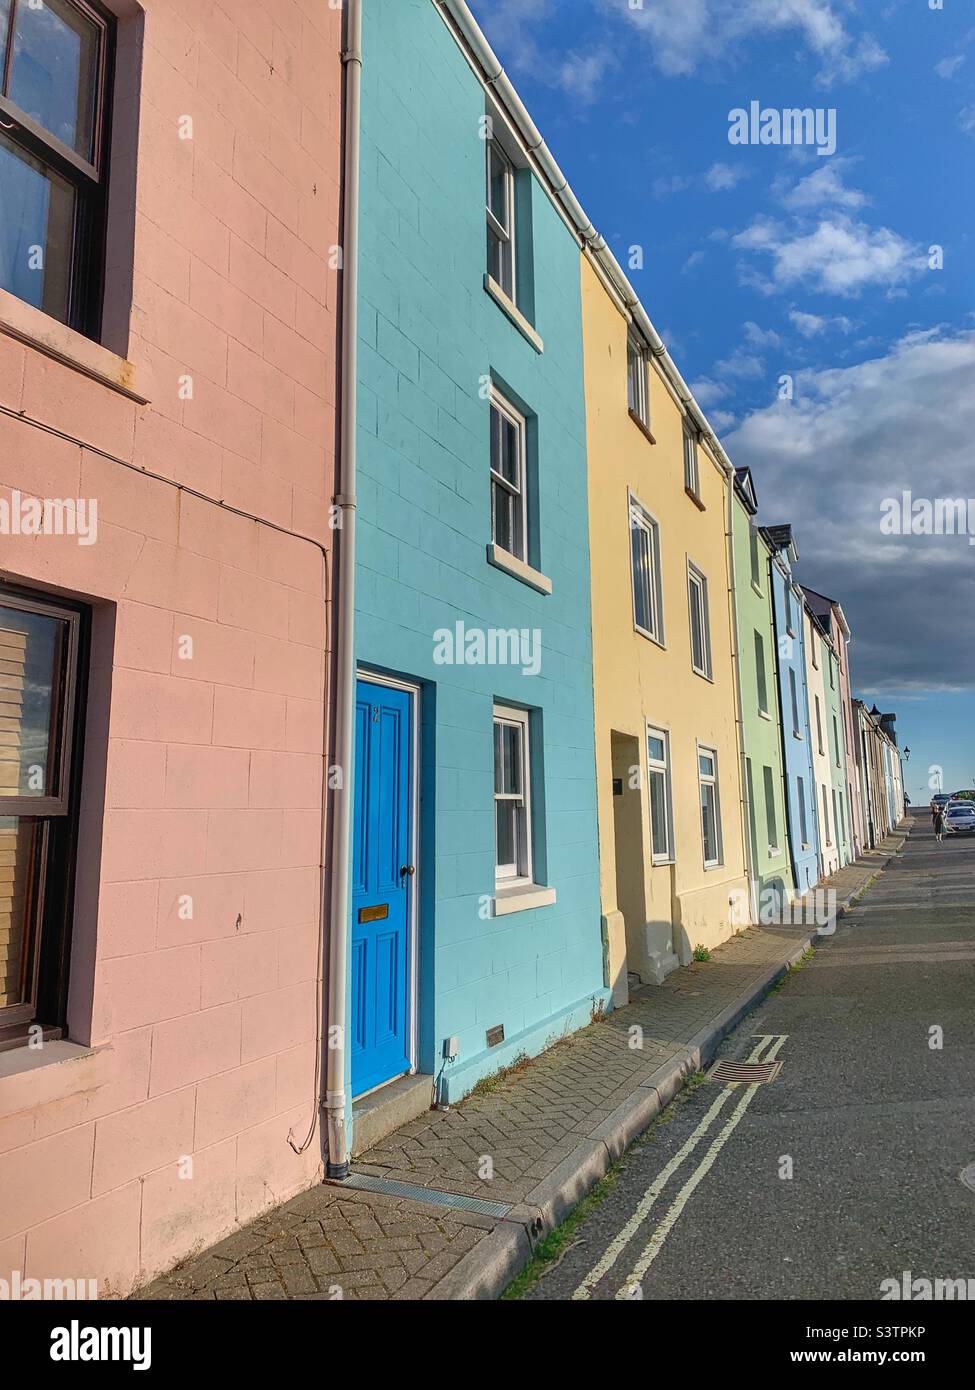 Colourful houses on the isle of Portland Weymouth Stock Photo